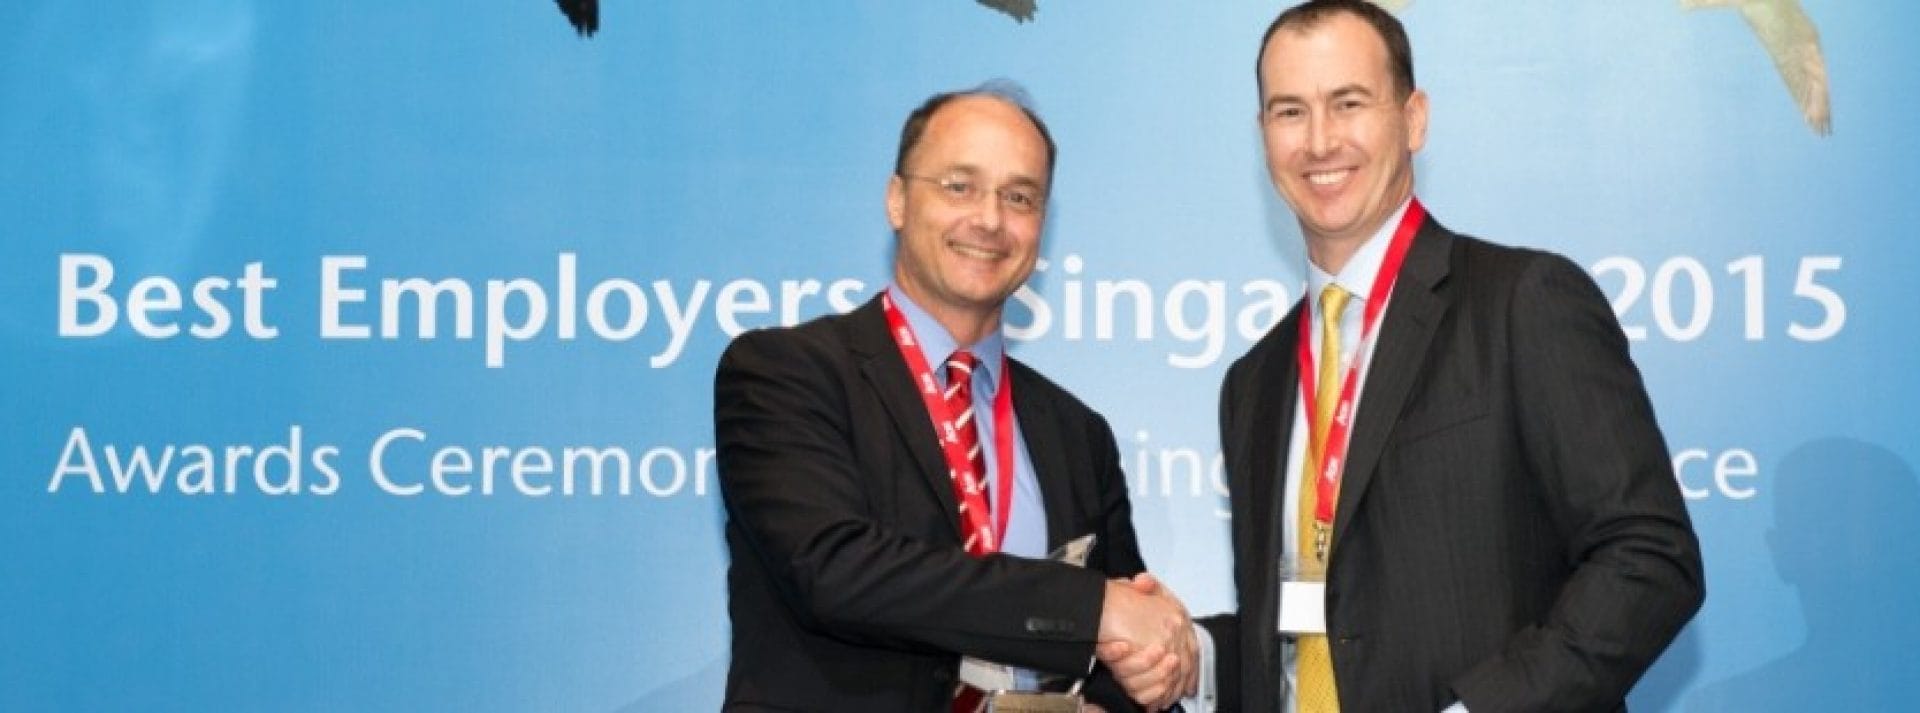 Mr. Robbert Van Der Feltz, President of Hilti Asia Pacific (left) accepting the Best Employer Award.